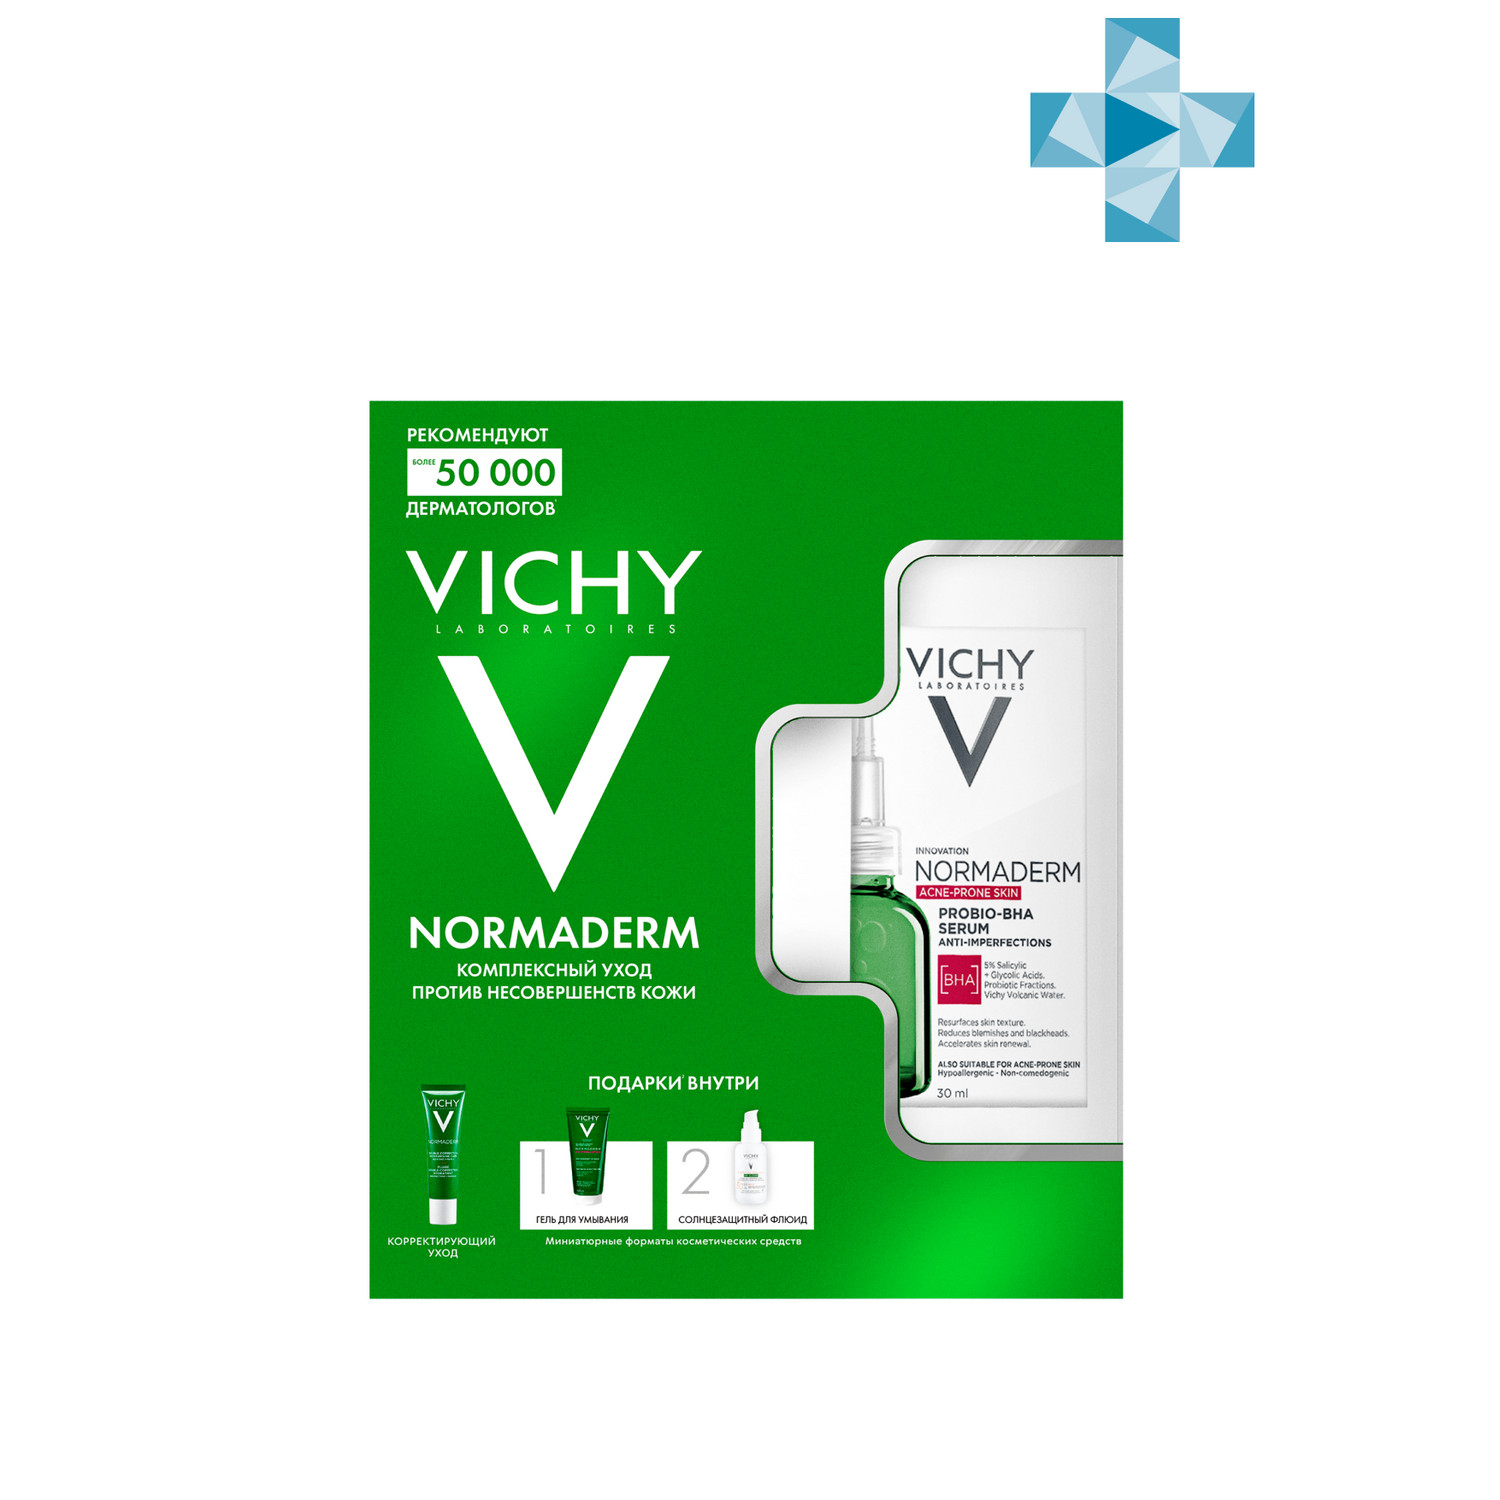 Vichy Набор для кожи, склонной к несовершенствам: сыворотка 30 мл + уход 30 мл + гель для умывания 50 мл + крем SPF 50+ 3 мл (Vichy, Normaderm) сыворотка против несовершенств кожи пробиотическая probio bha serum normaderm vichy виши 30мл